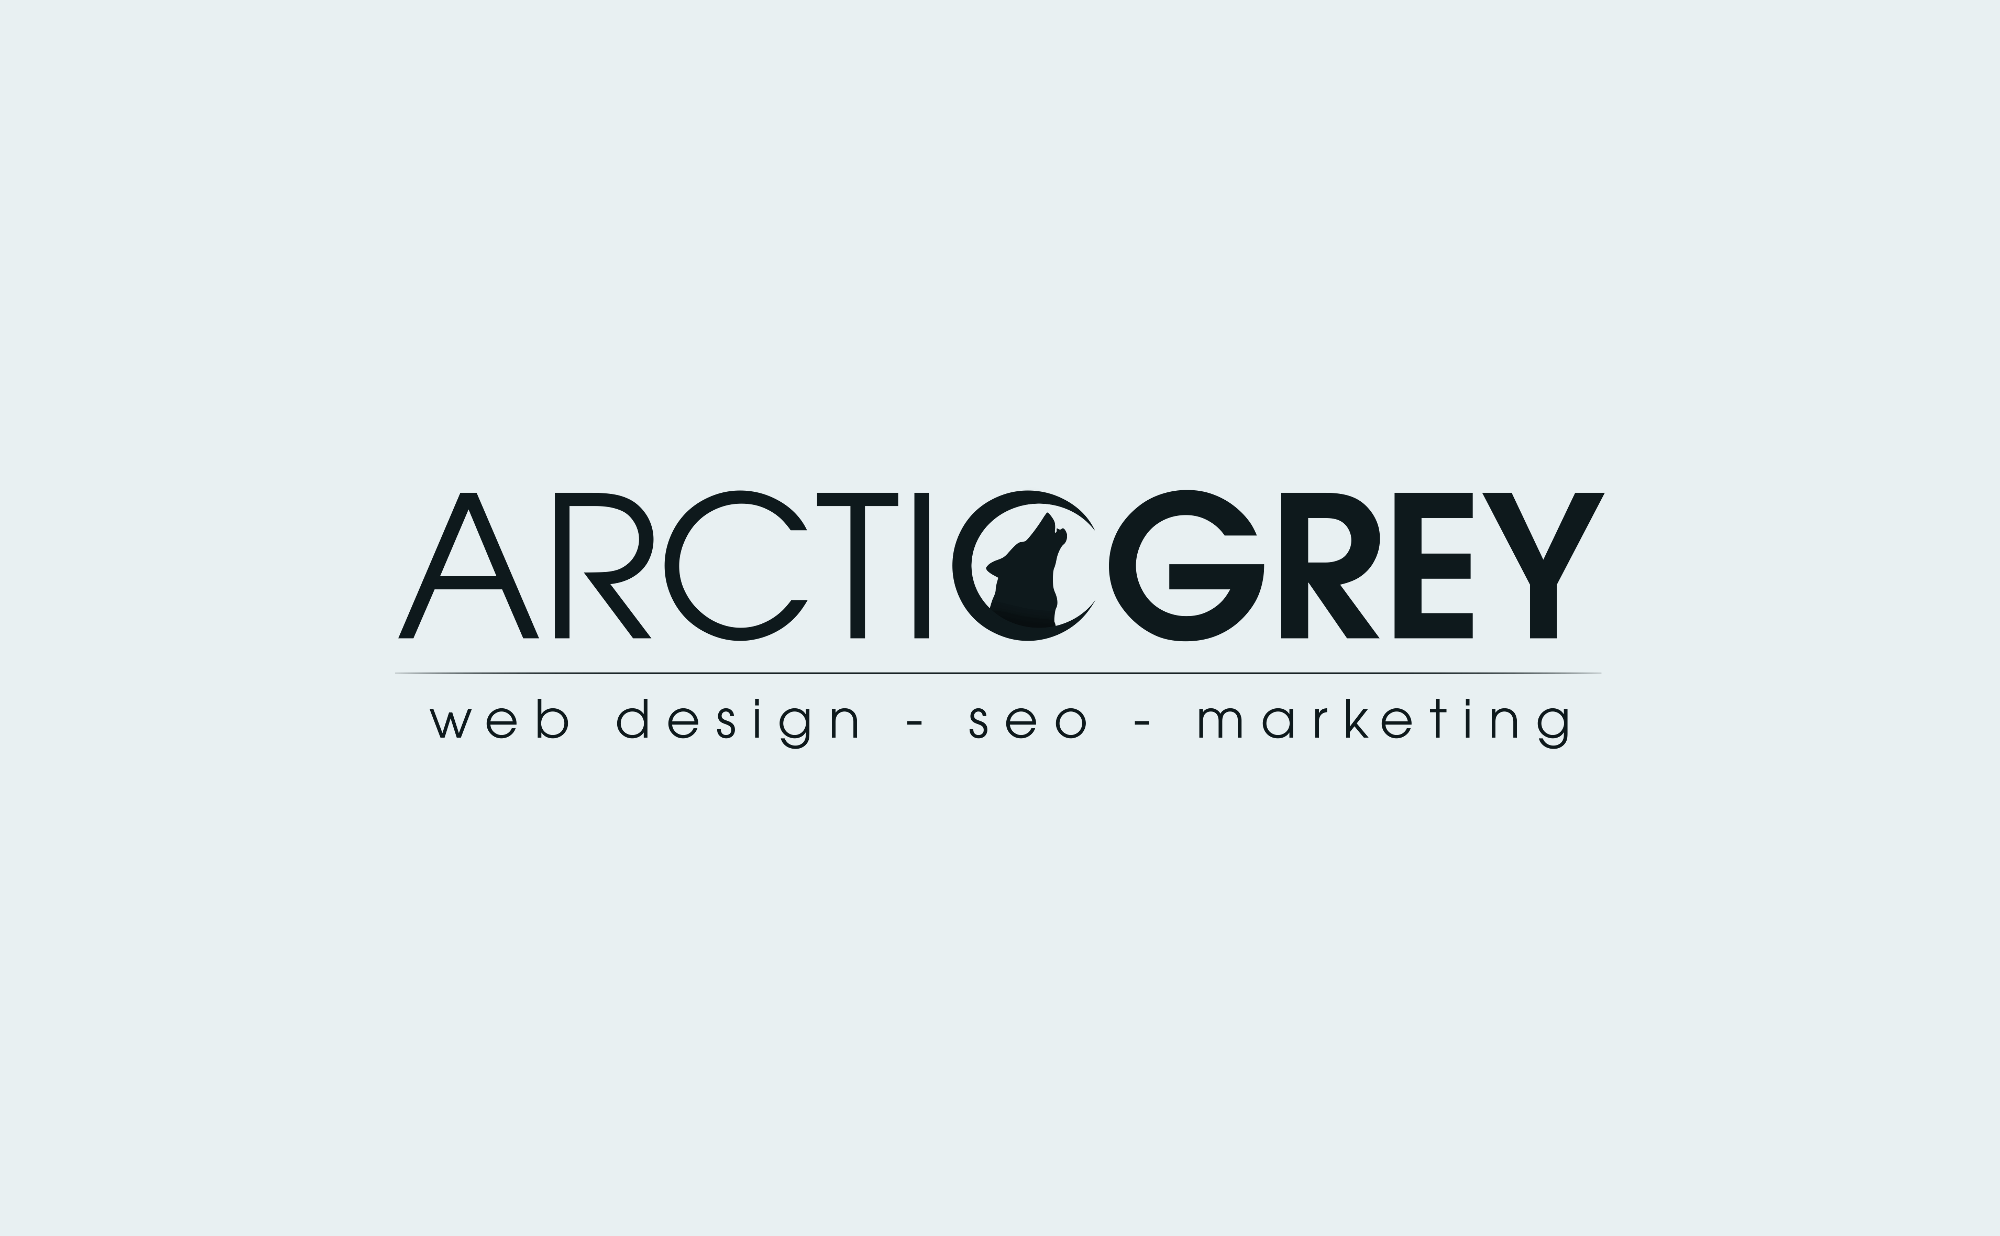 Top Shopify Design Business Logo: Arctic Grey Inc